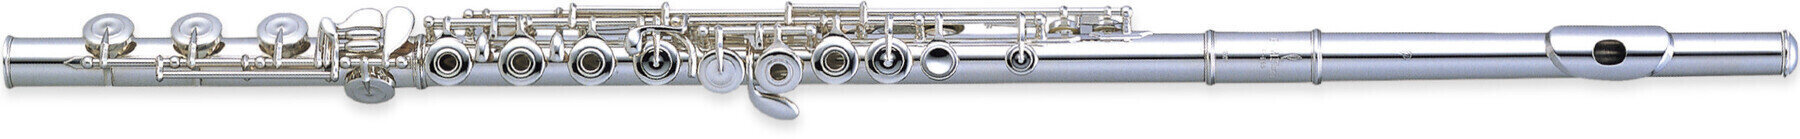 Concert flute Pearl Flute F665RE Concert flute